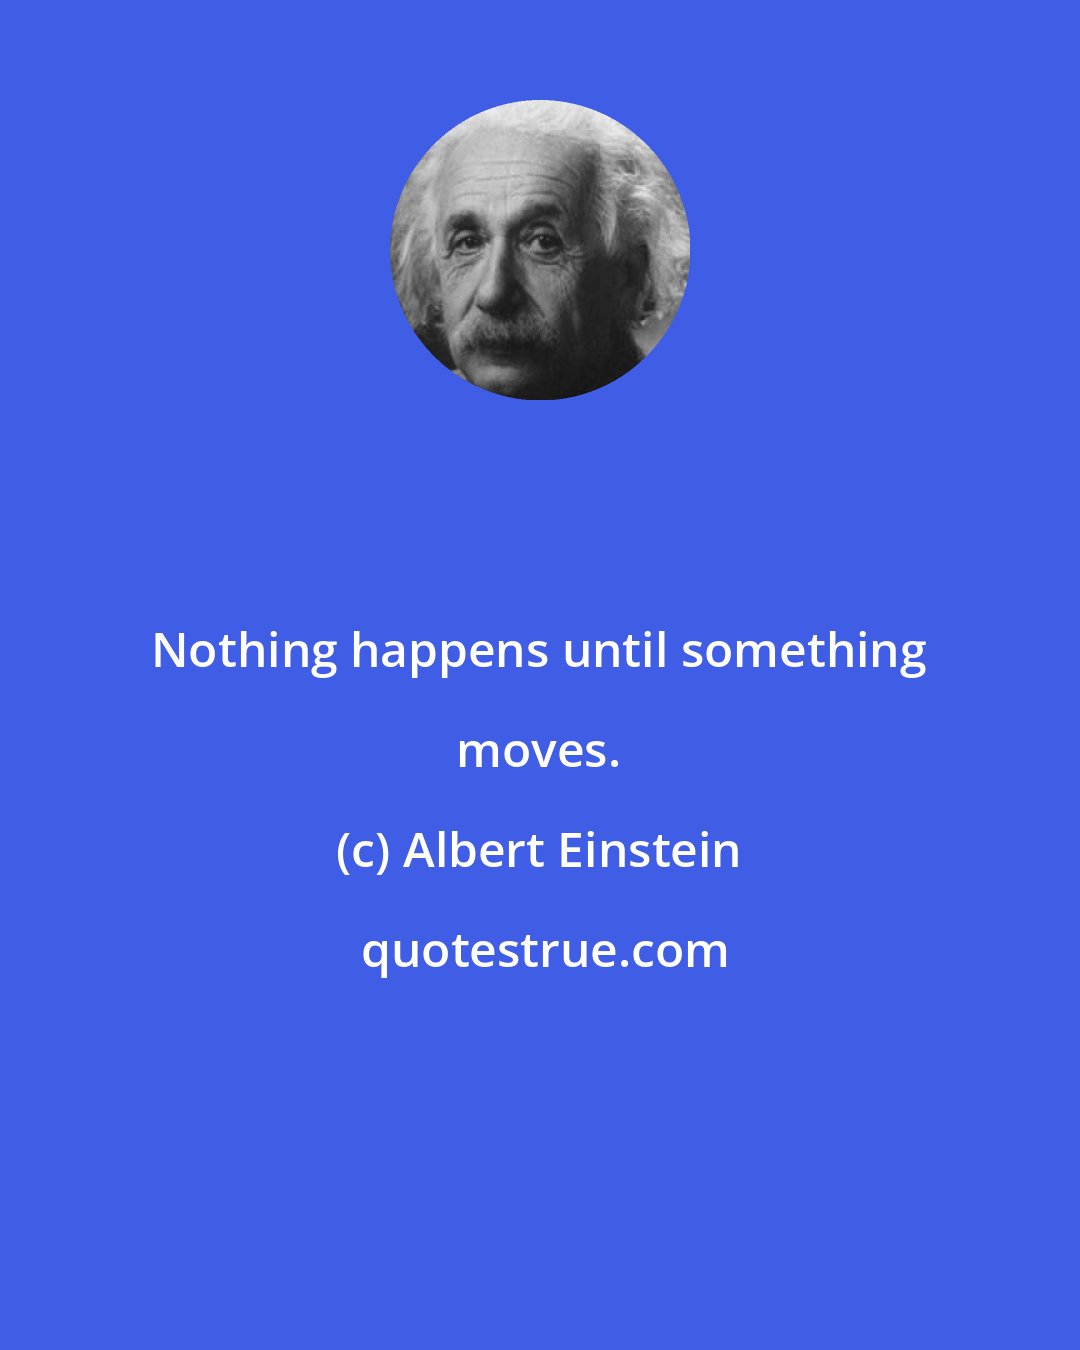 Albert Einstein: Nothing happens until something moves.